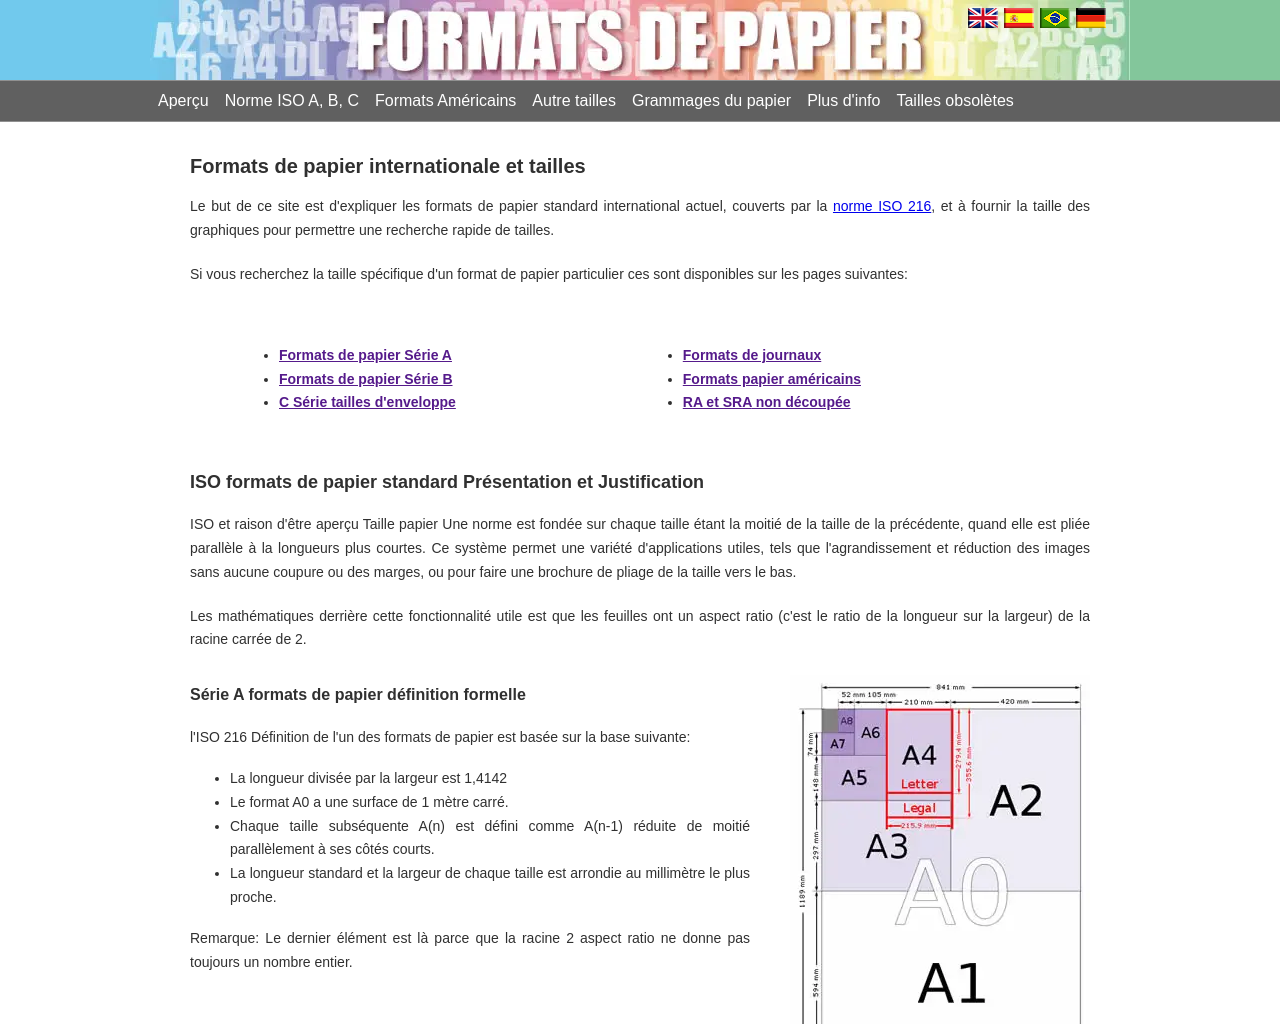 www.formatsdepapier.com